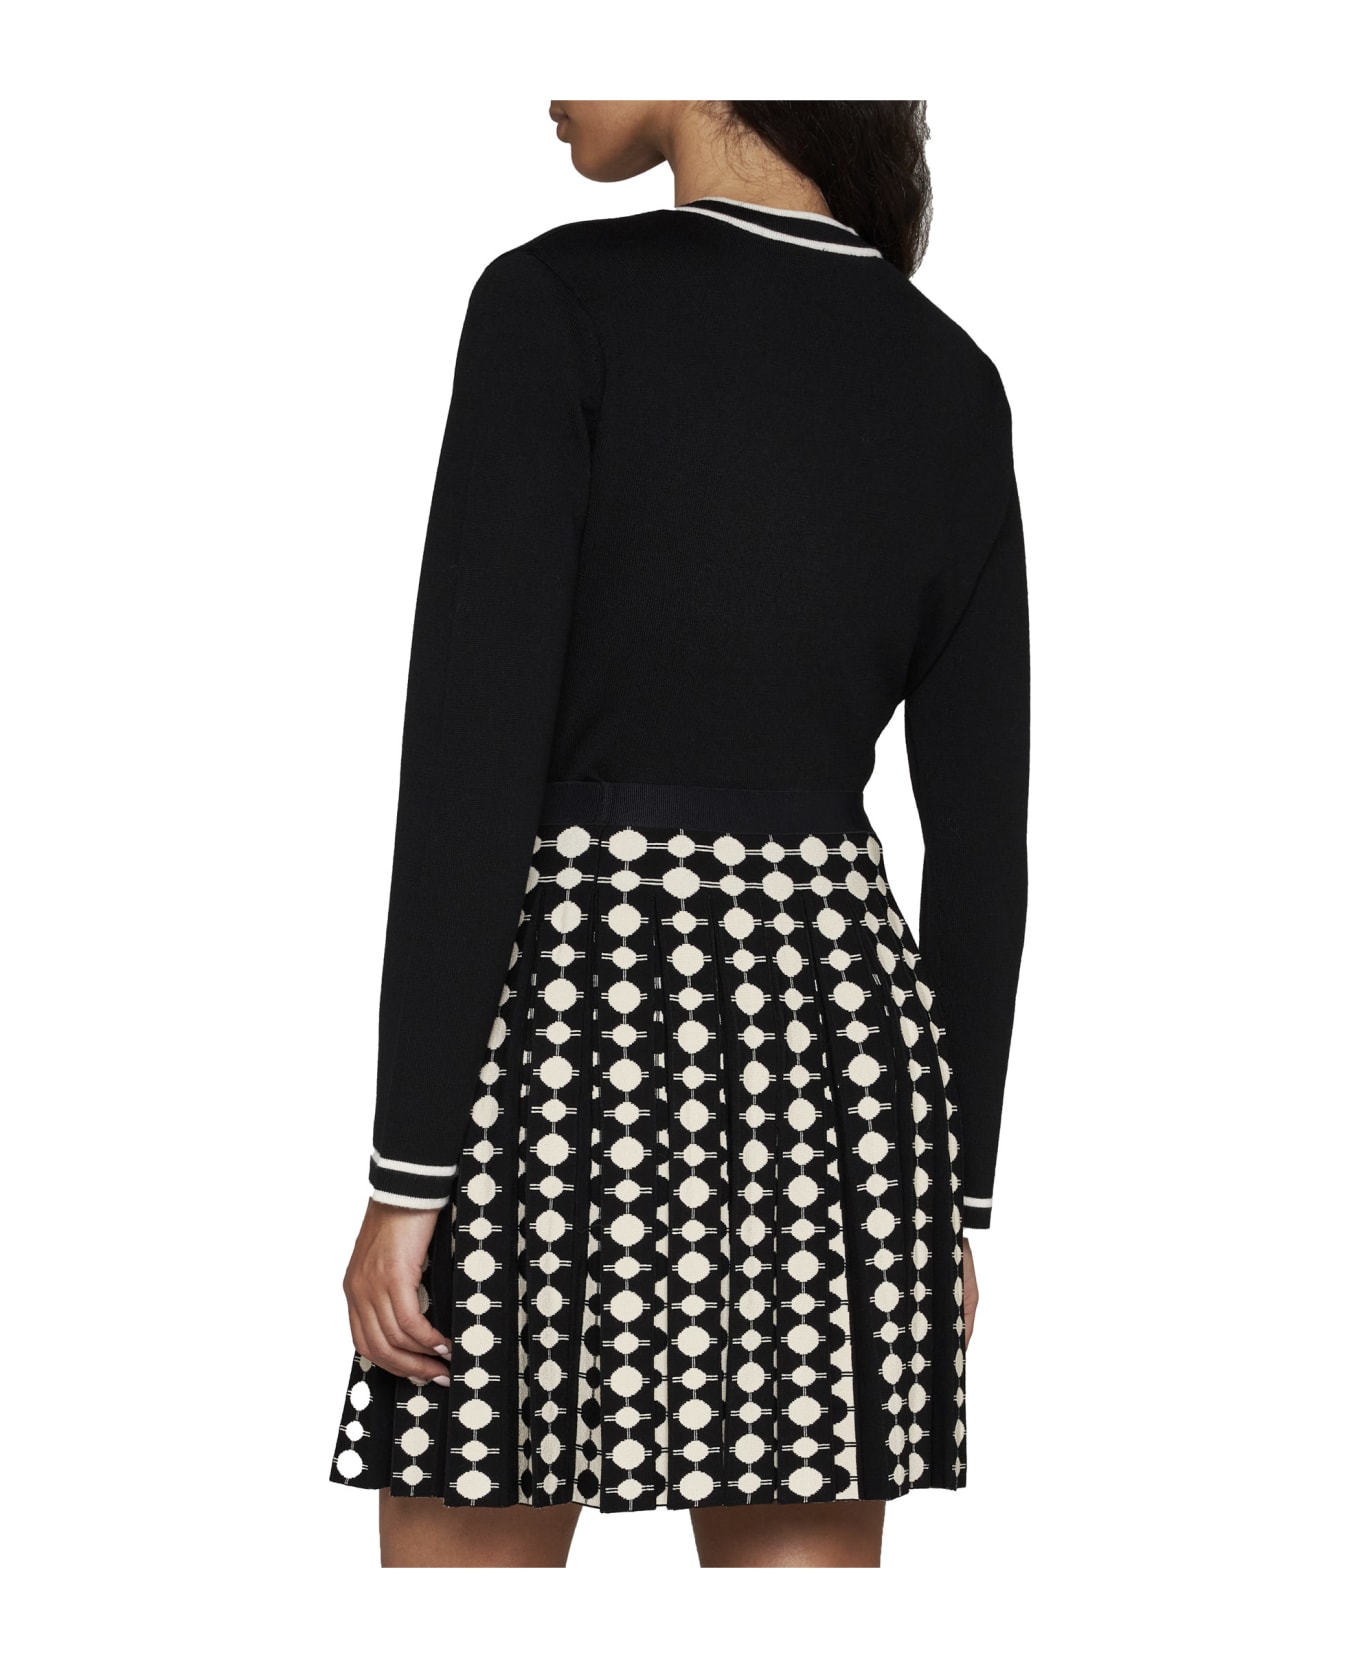 Tory Burch Jacquard Mini Skirt - black スカート